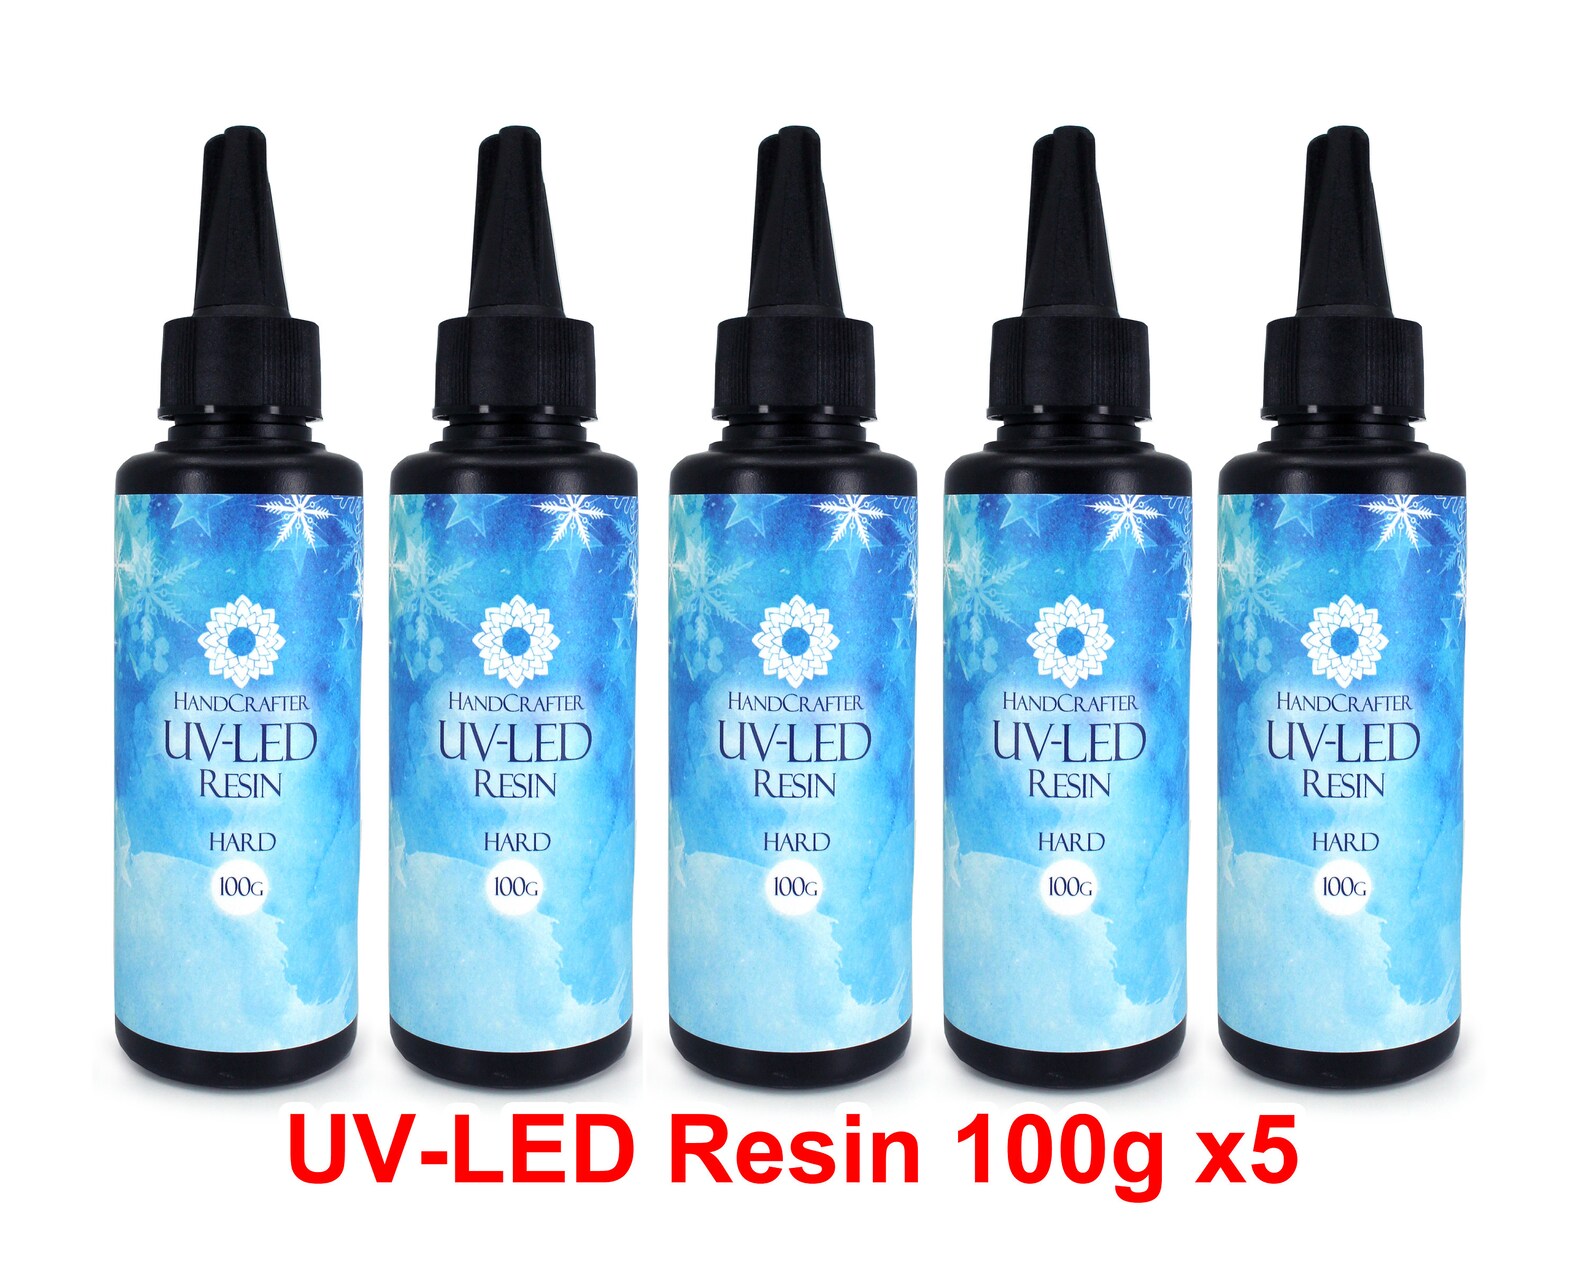 UV Resin. УФ смола. UV-led Resin hard купить. UV-led Resin купить японскую.